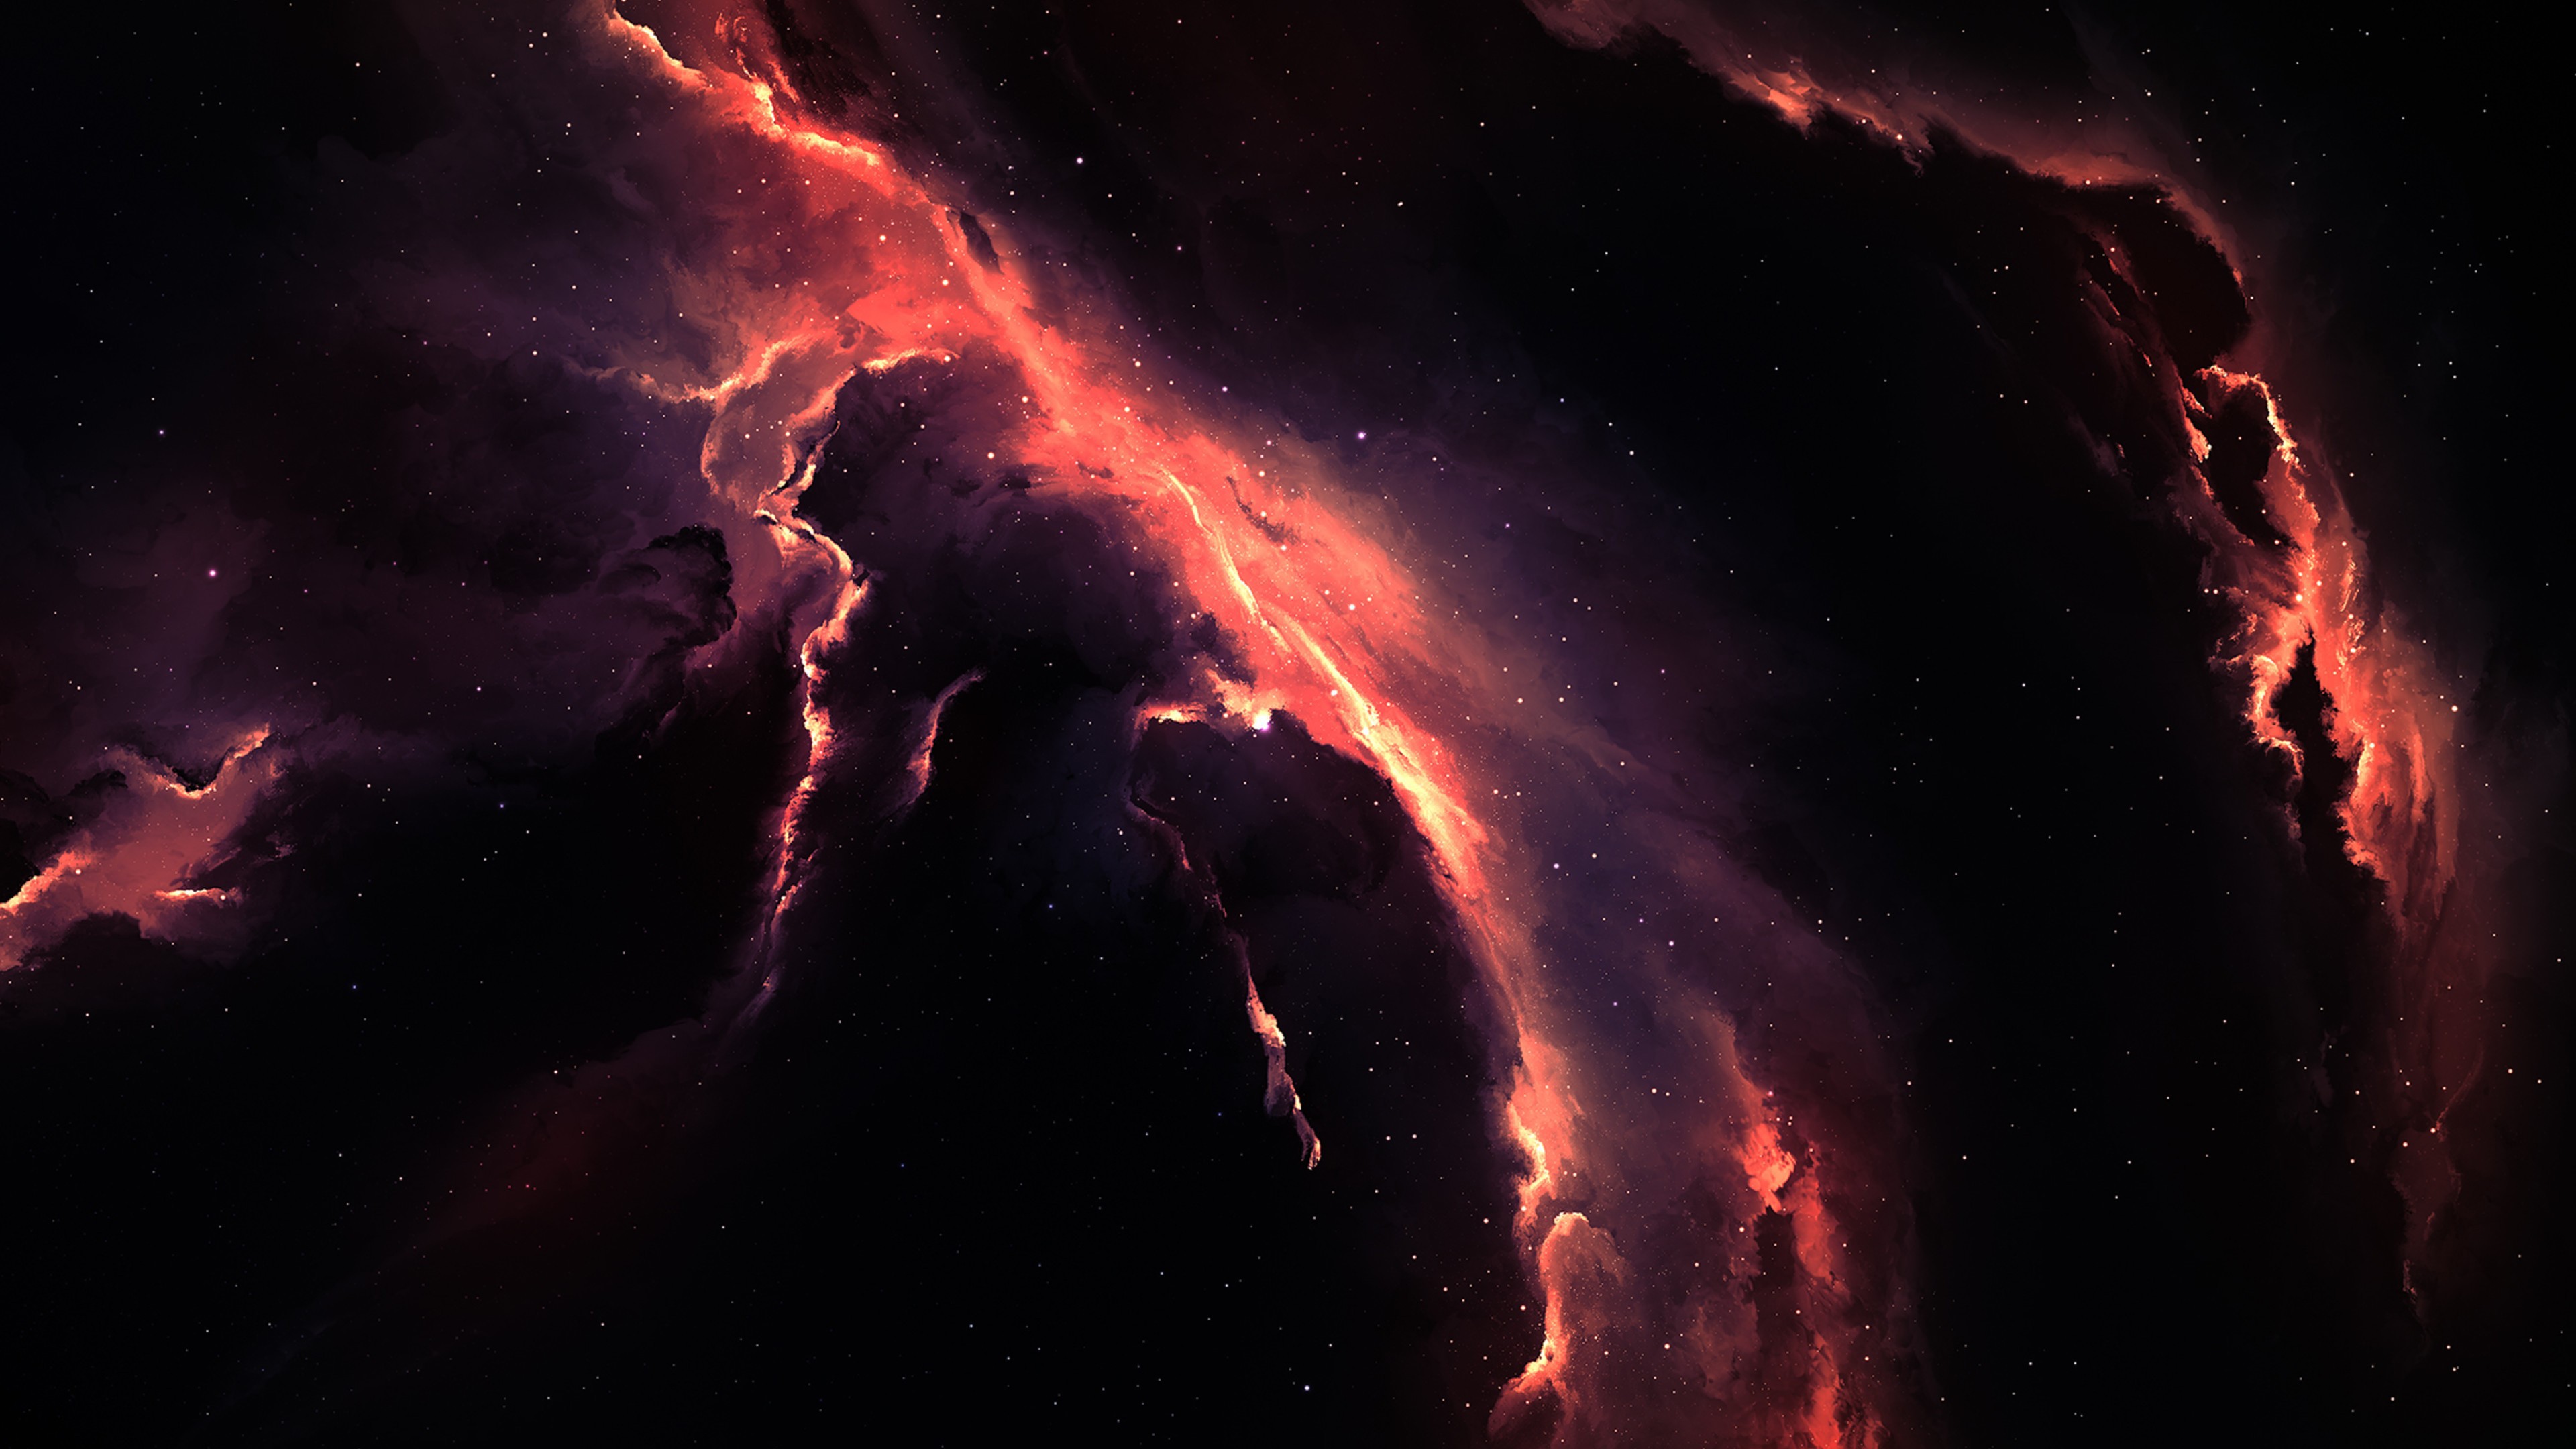 Nebula Space Gas Giant 3D Space Art Digital Art 3840x2160